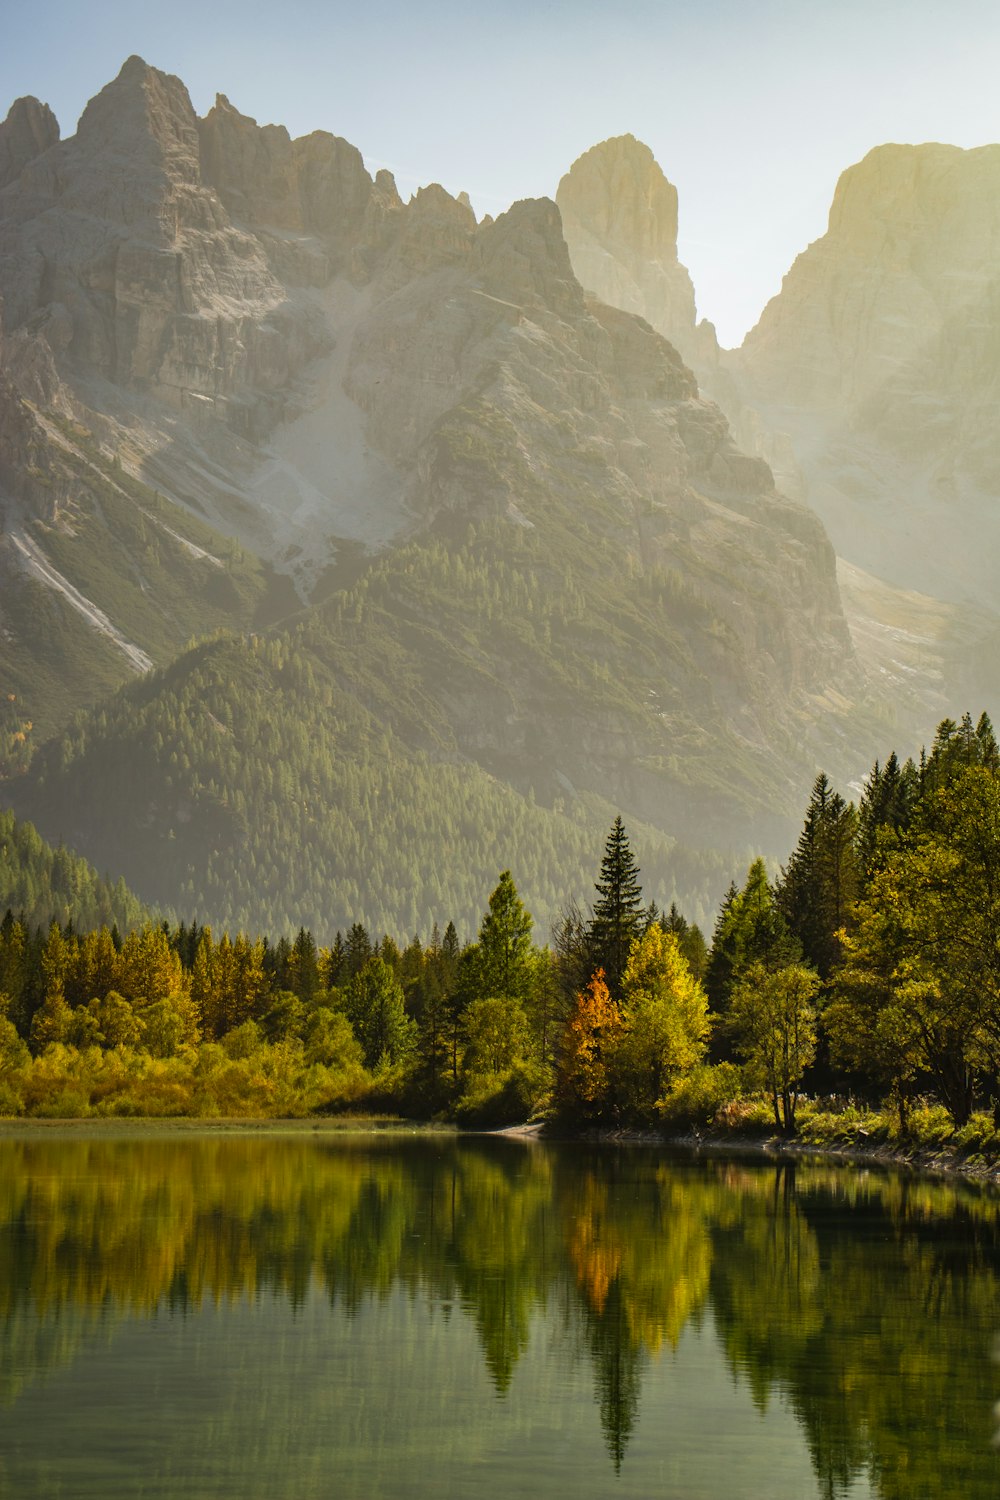 Un lago rodeado de montañas con árboles en primer plano